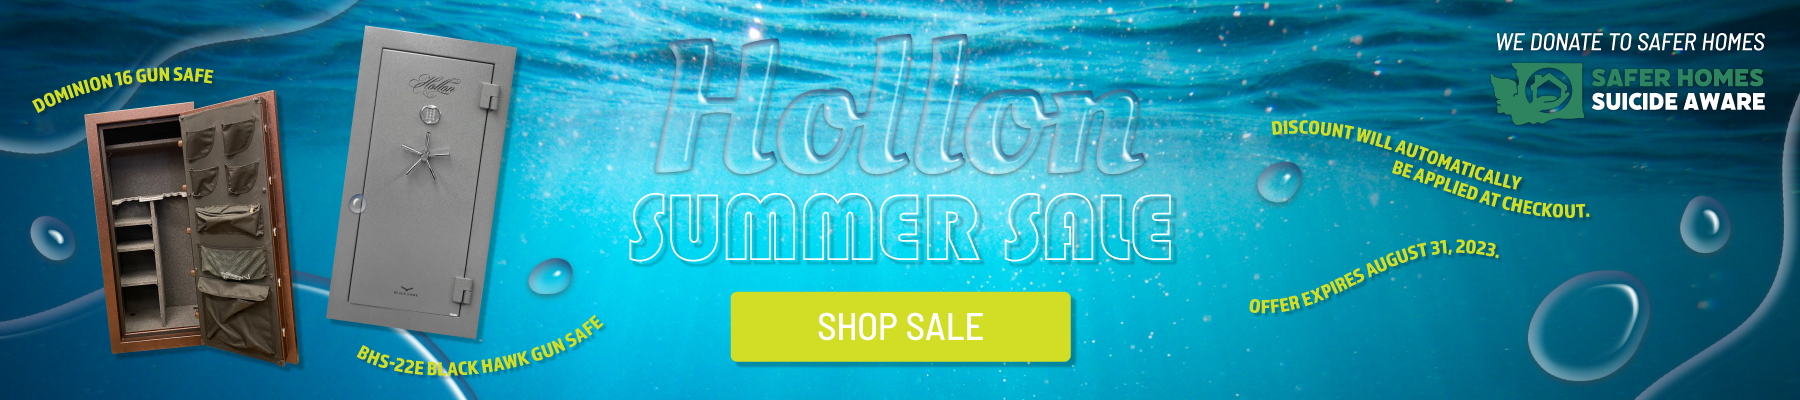 Hollon Summer Gun Safe Sale